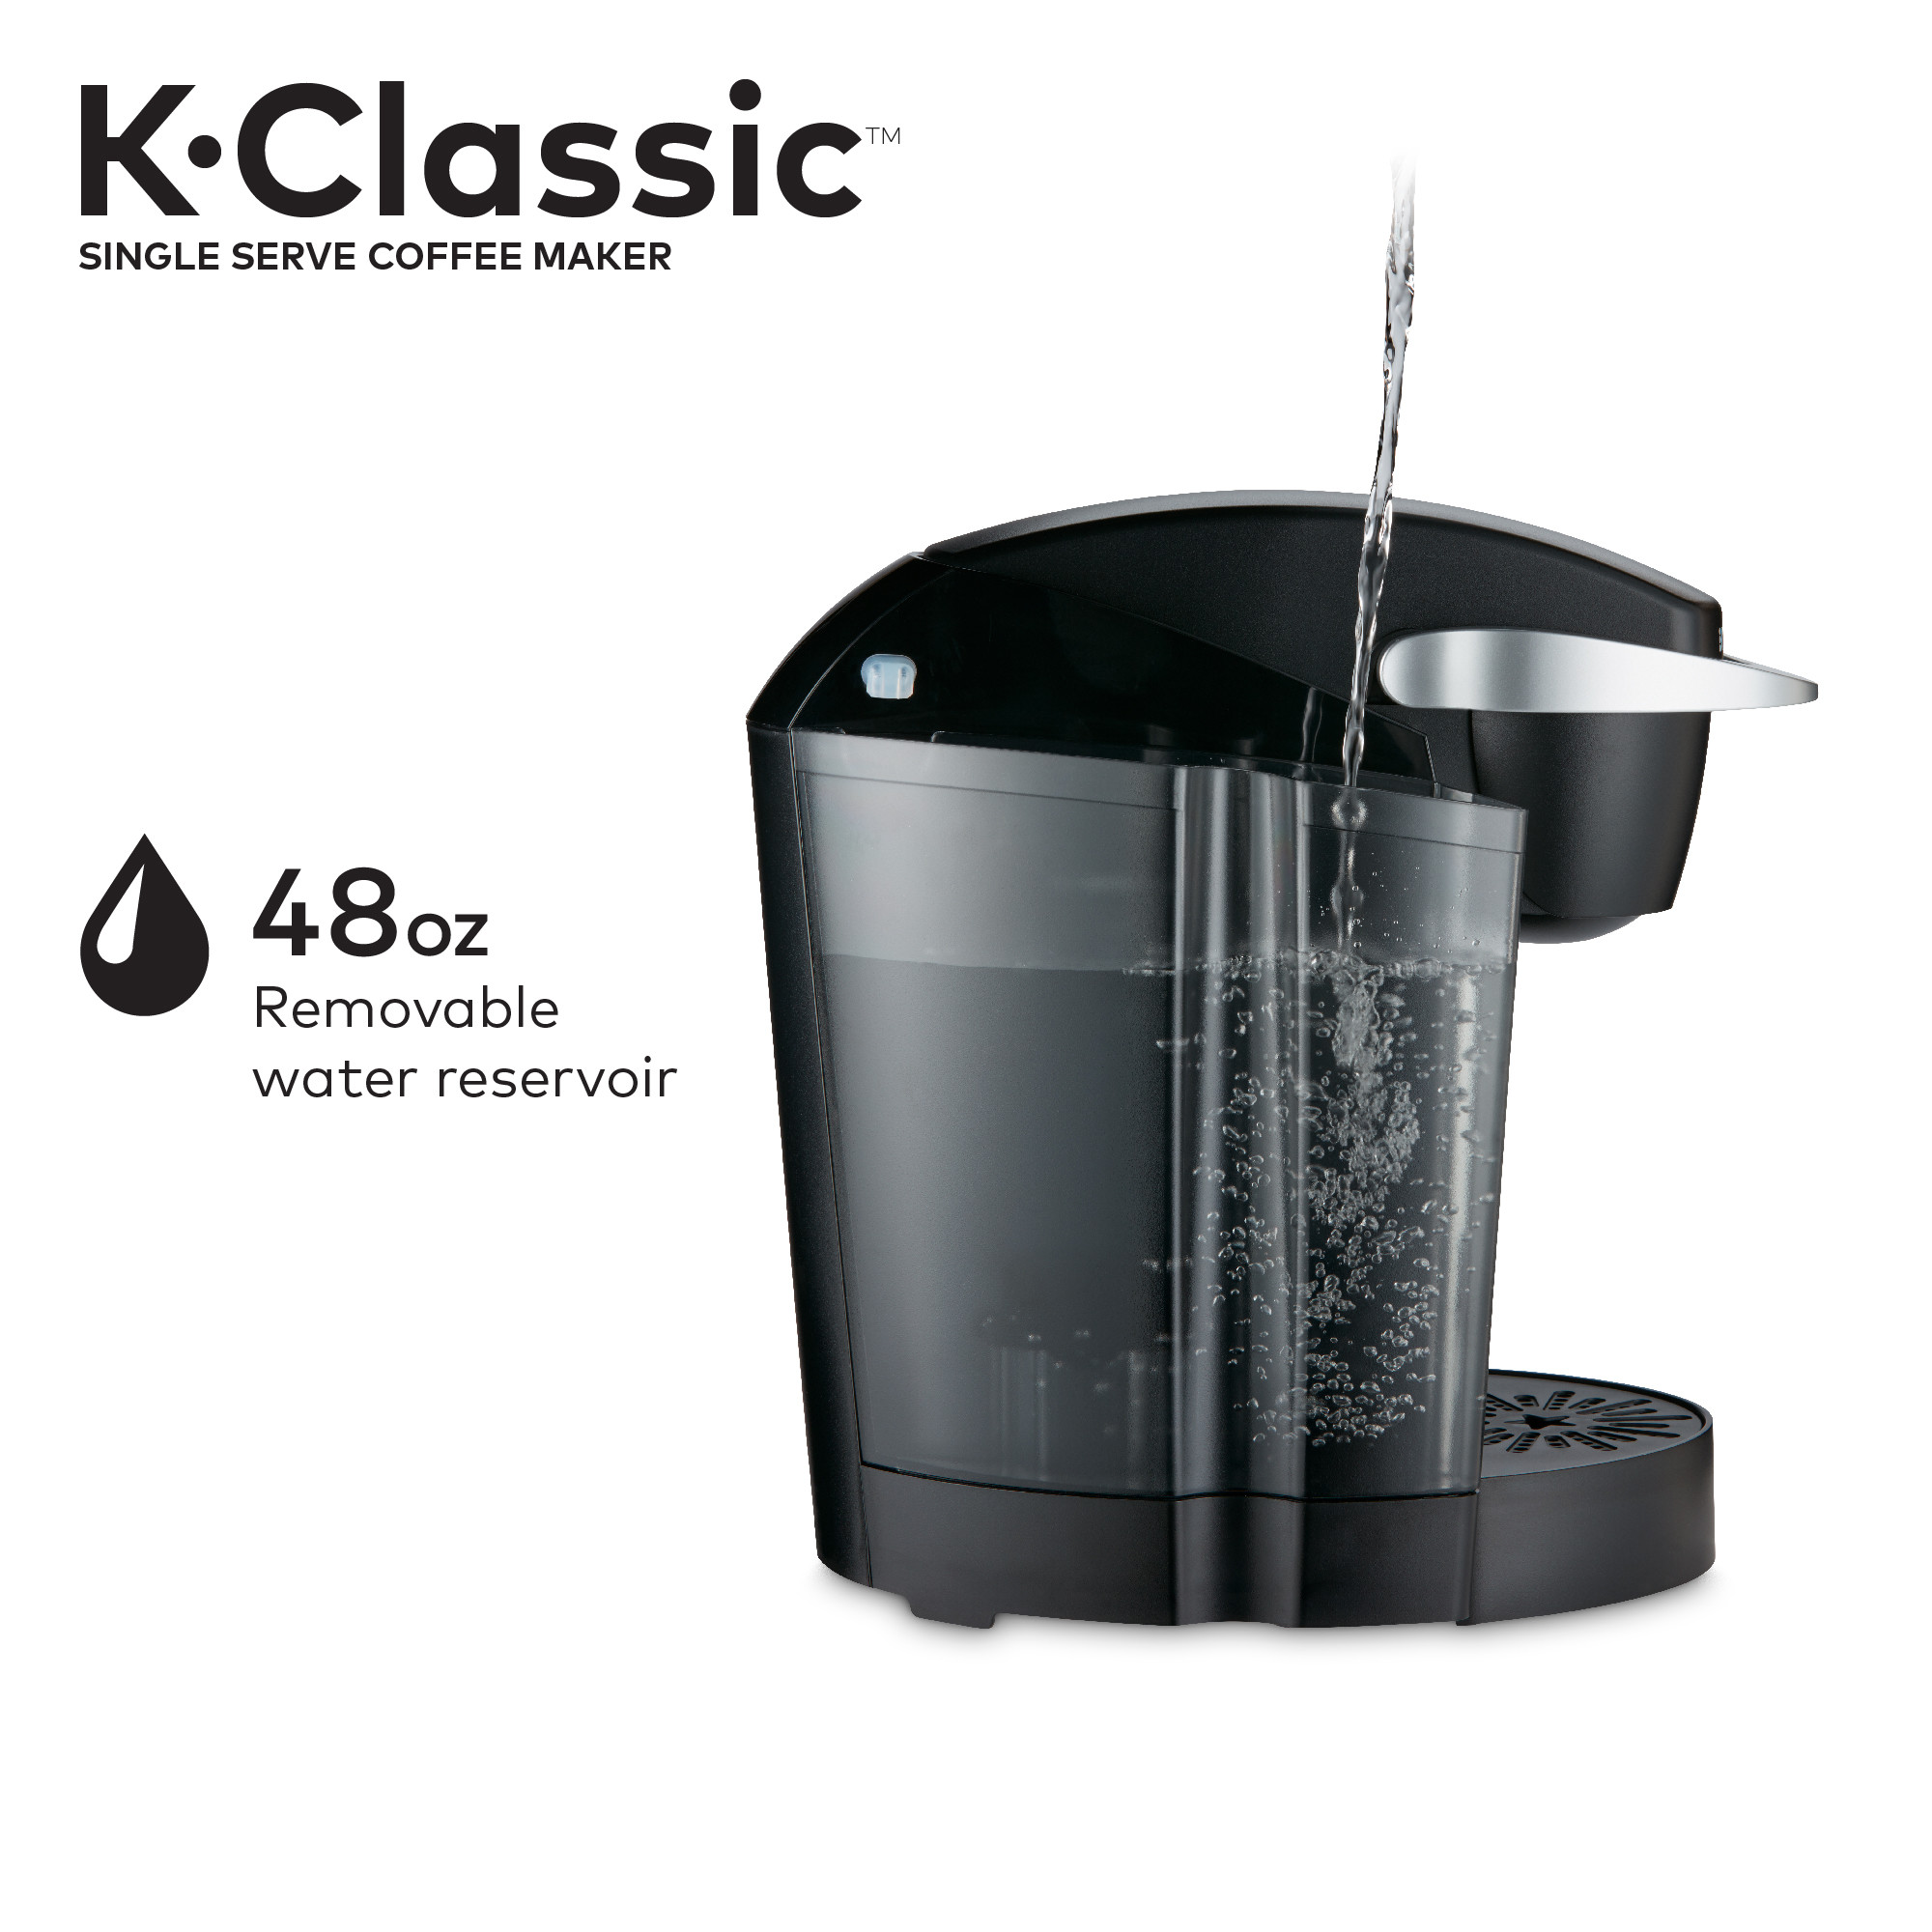 Keurig K-Classic Single Serve K-Cup Pod Coffee Maker, Black - image 6 of 16